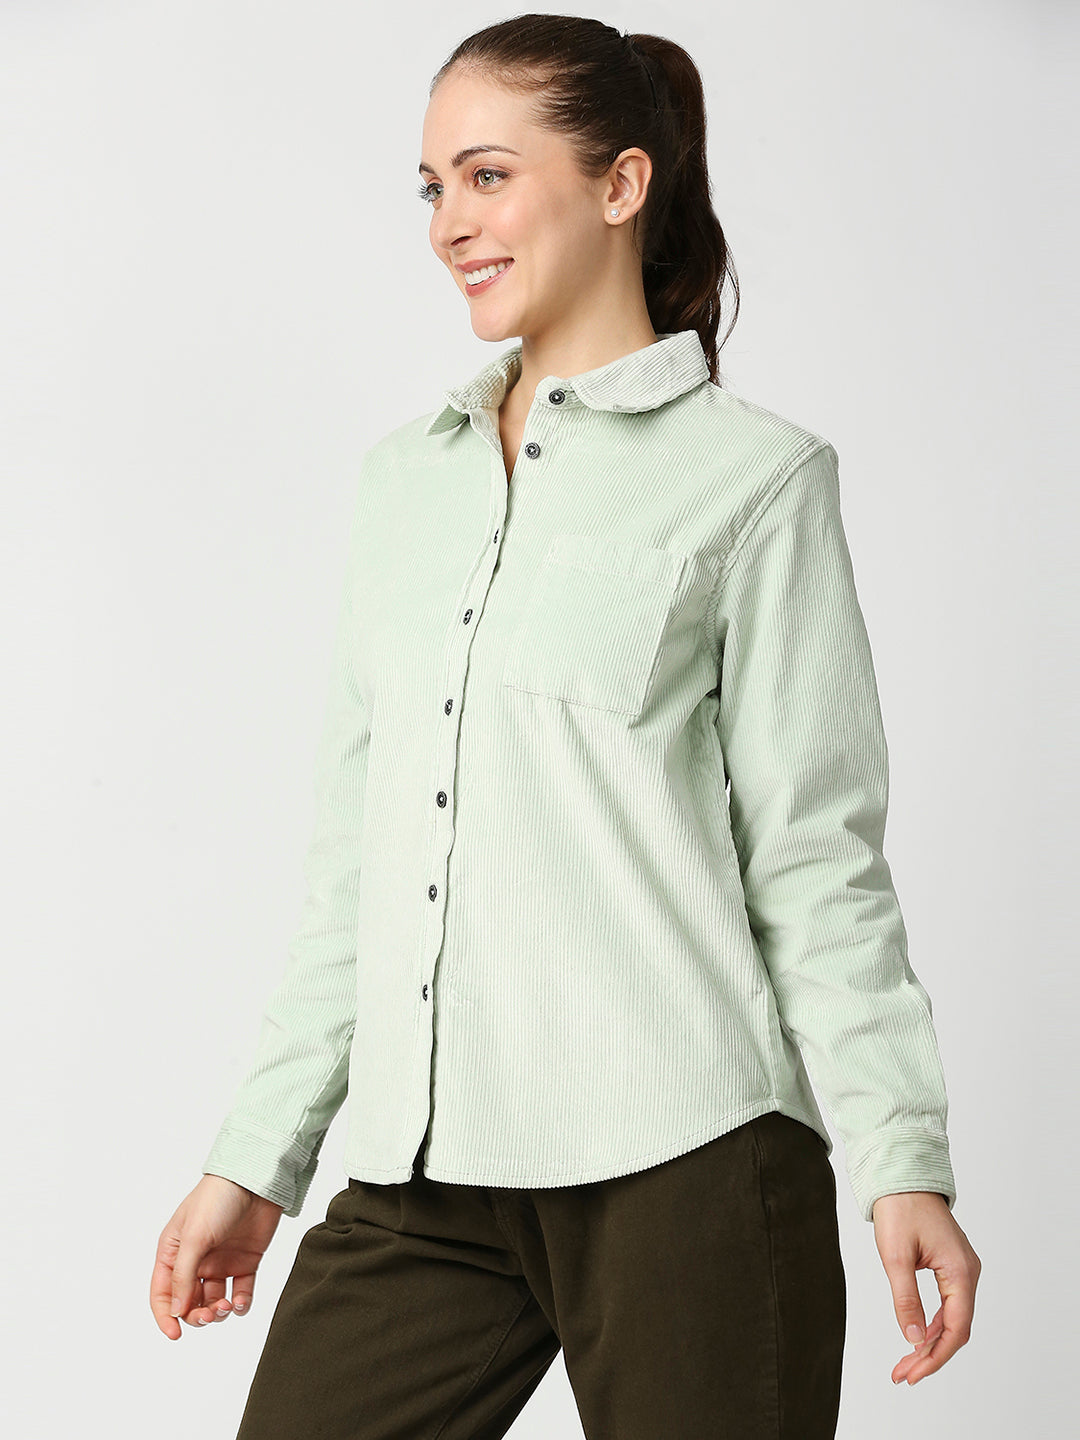 Buy Blamblack Women's Mint Color Full Sleeves Shirt